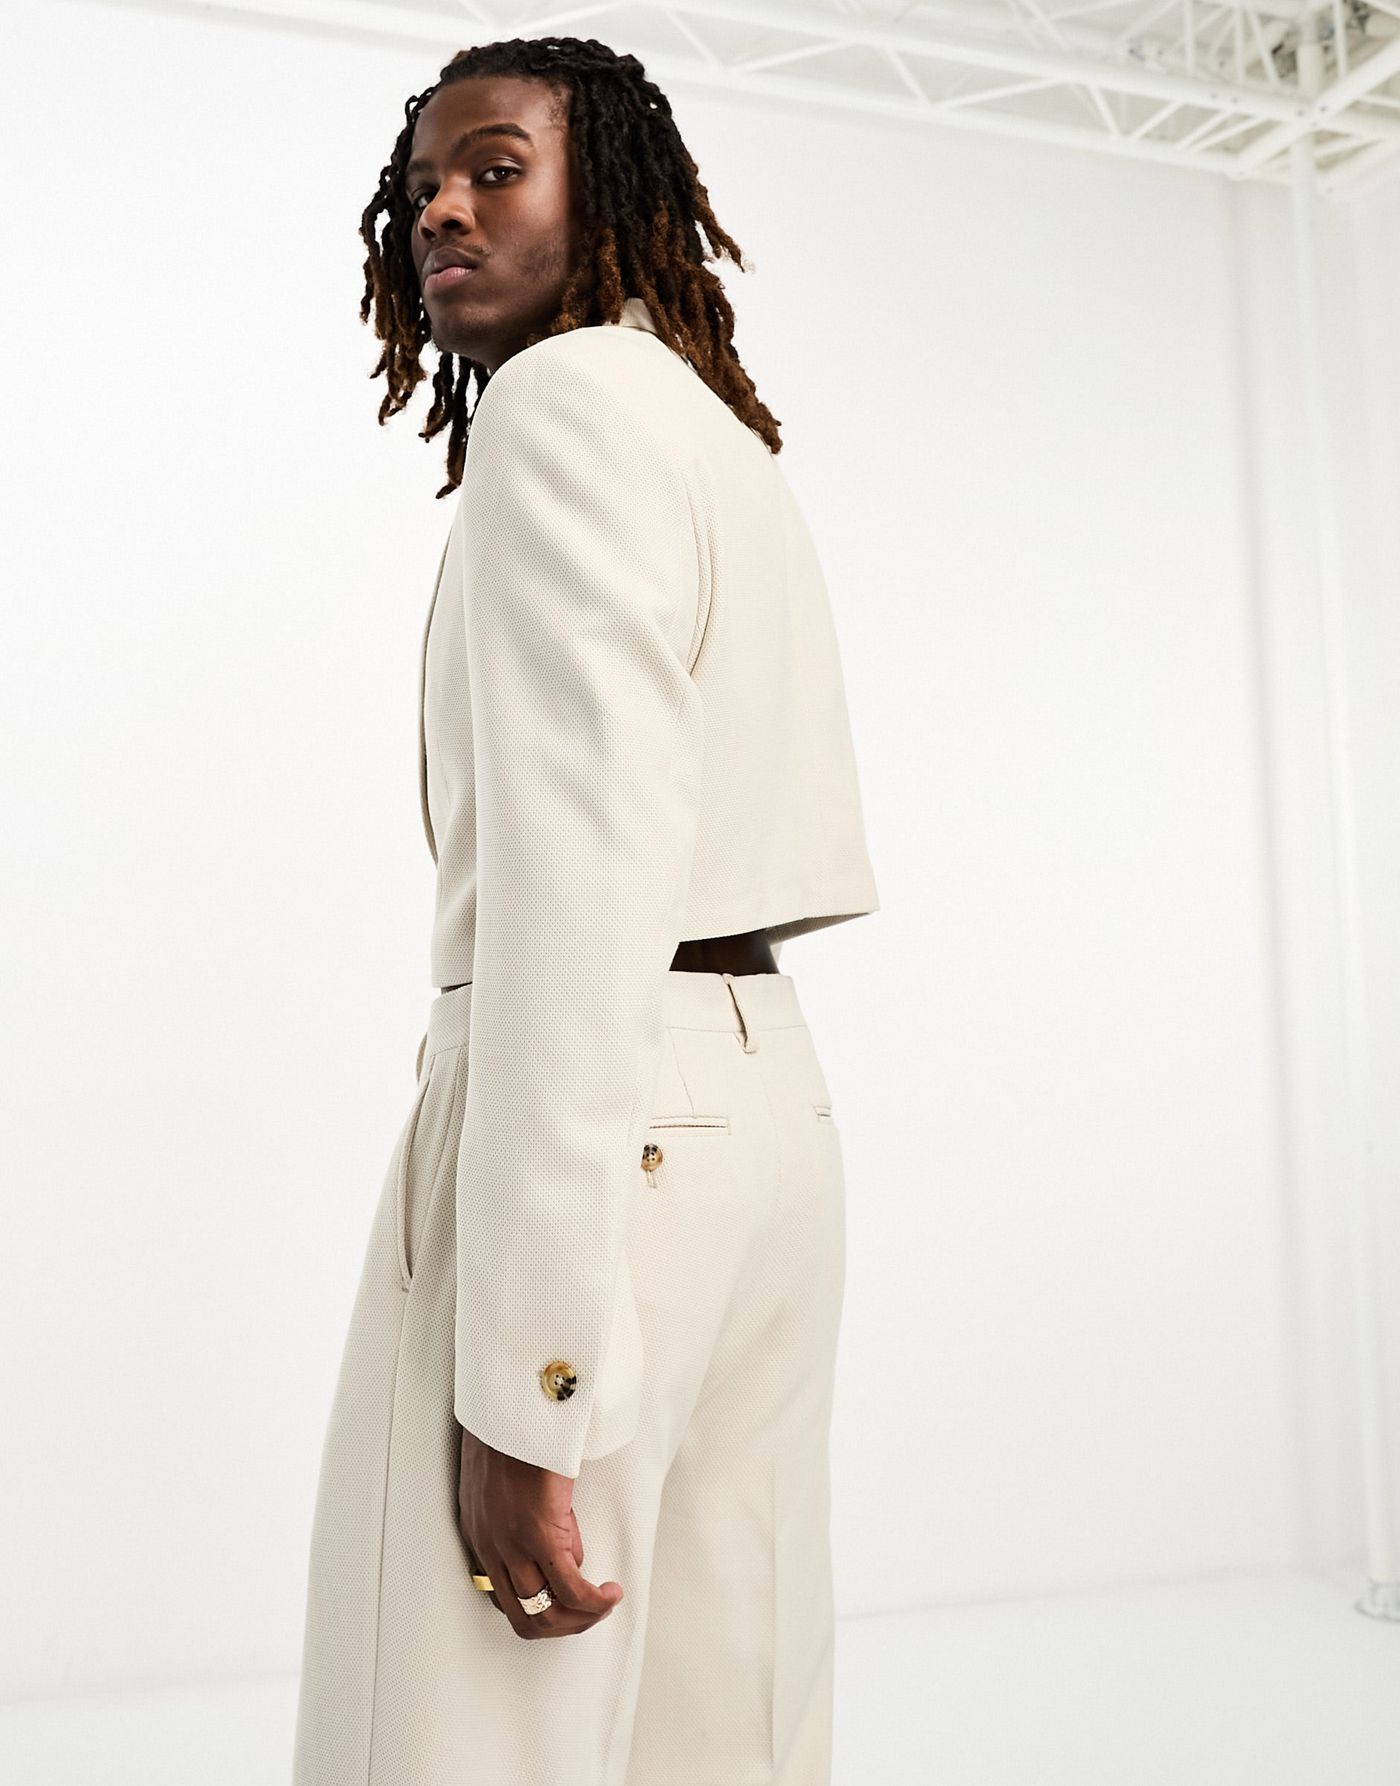 ASOS DESIGN slim super cropped suit jacket in beige textured jersey